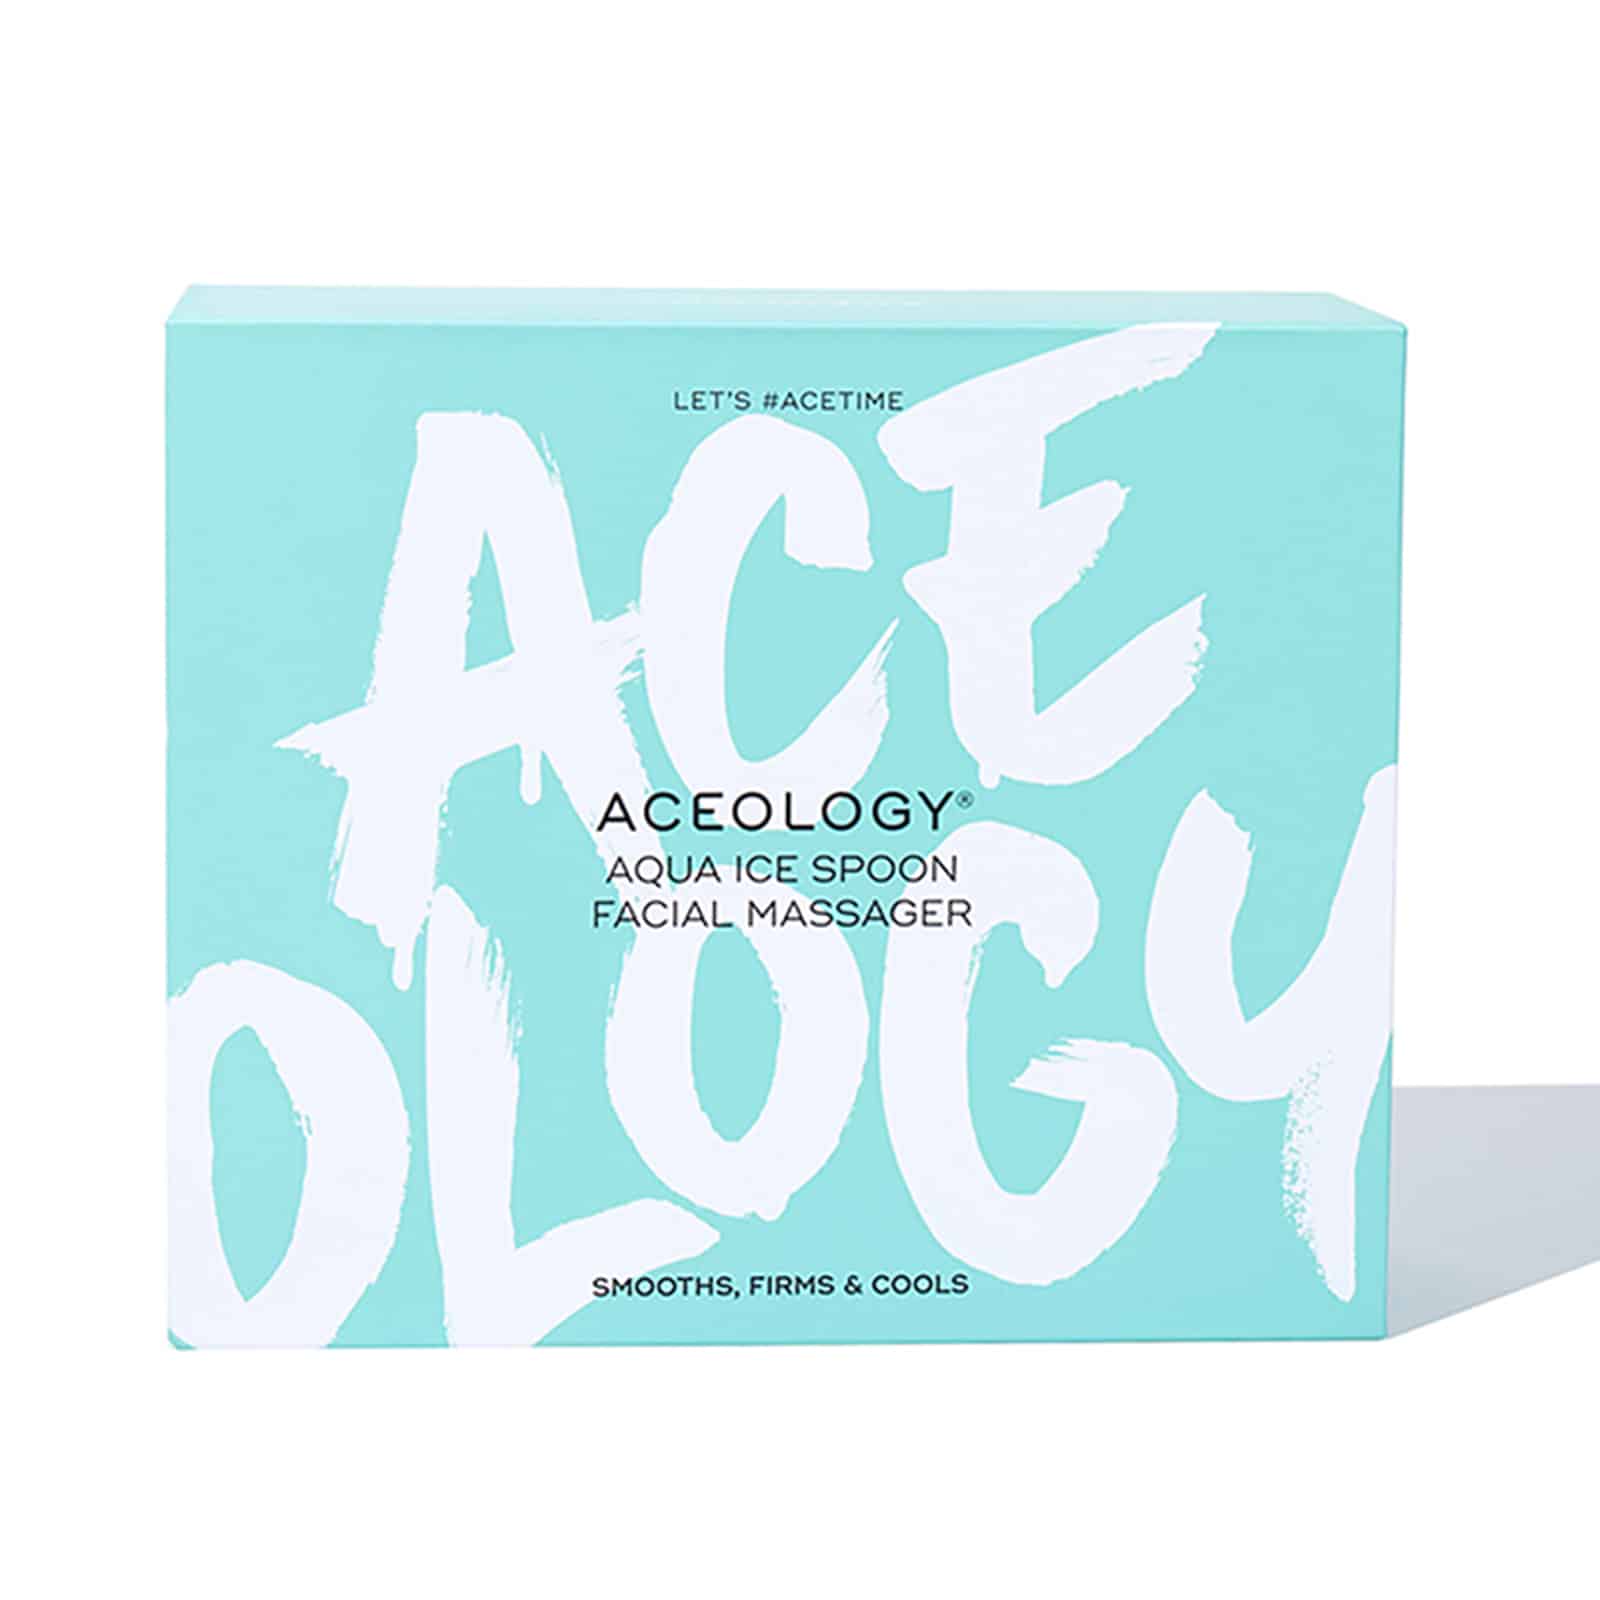 Fallachi beauty – 2022 – Aceology – Aqua Ice Spoon Facial Massager